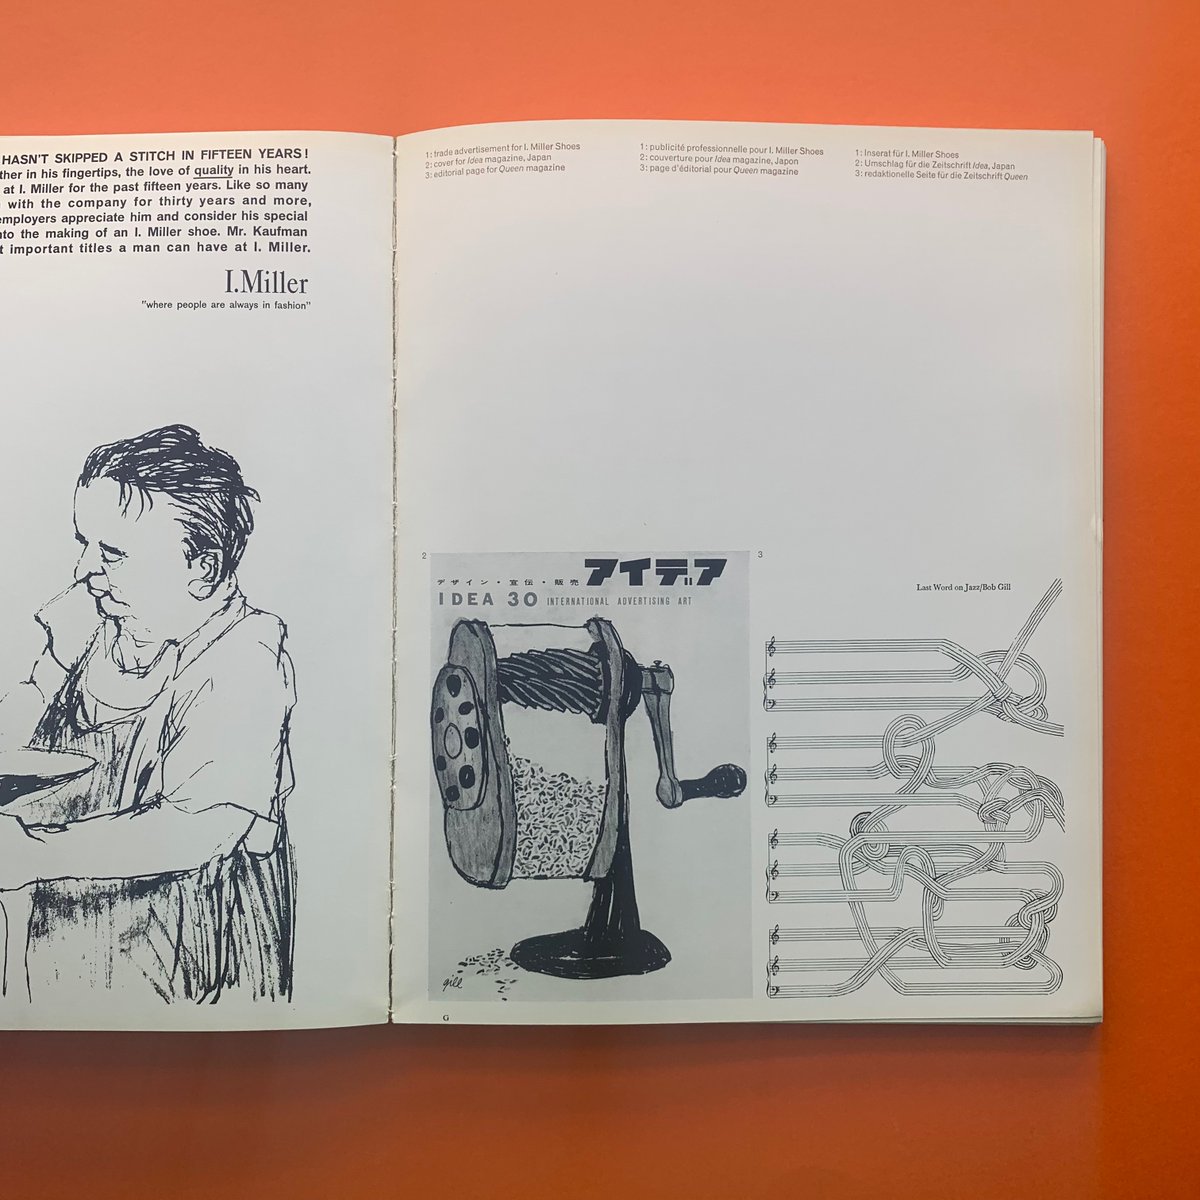 BROWSE theprintarkive.co.uk

17 graphic designers London
1963

#theprintarkive #designbook #graphicdesignbook #designstudio #1960sdesign #britishdesigner #DerekBirdsall #BobGill #AlanFletcher #ColinForbes #JockKinneir #MargaretCalvert #JohnSewell #TomWolsey